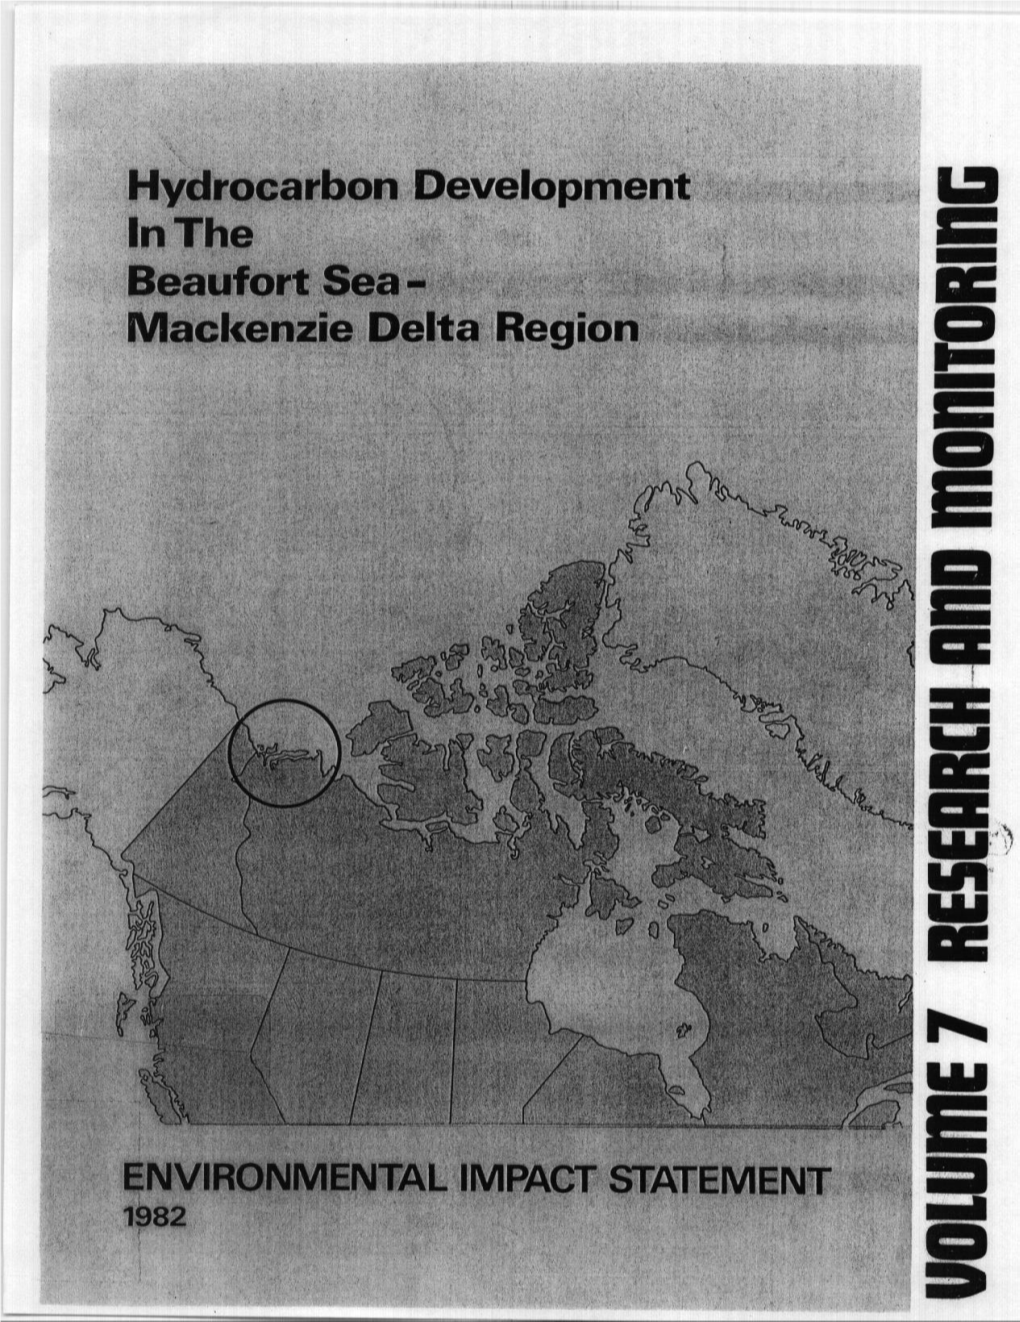 Environmental Impact Statement for Hydrocarbon Development in the Beaufort Sea, Mackenzie Delta Region